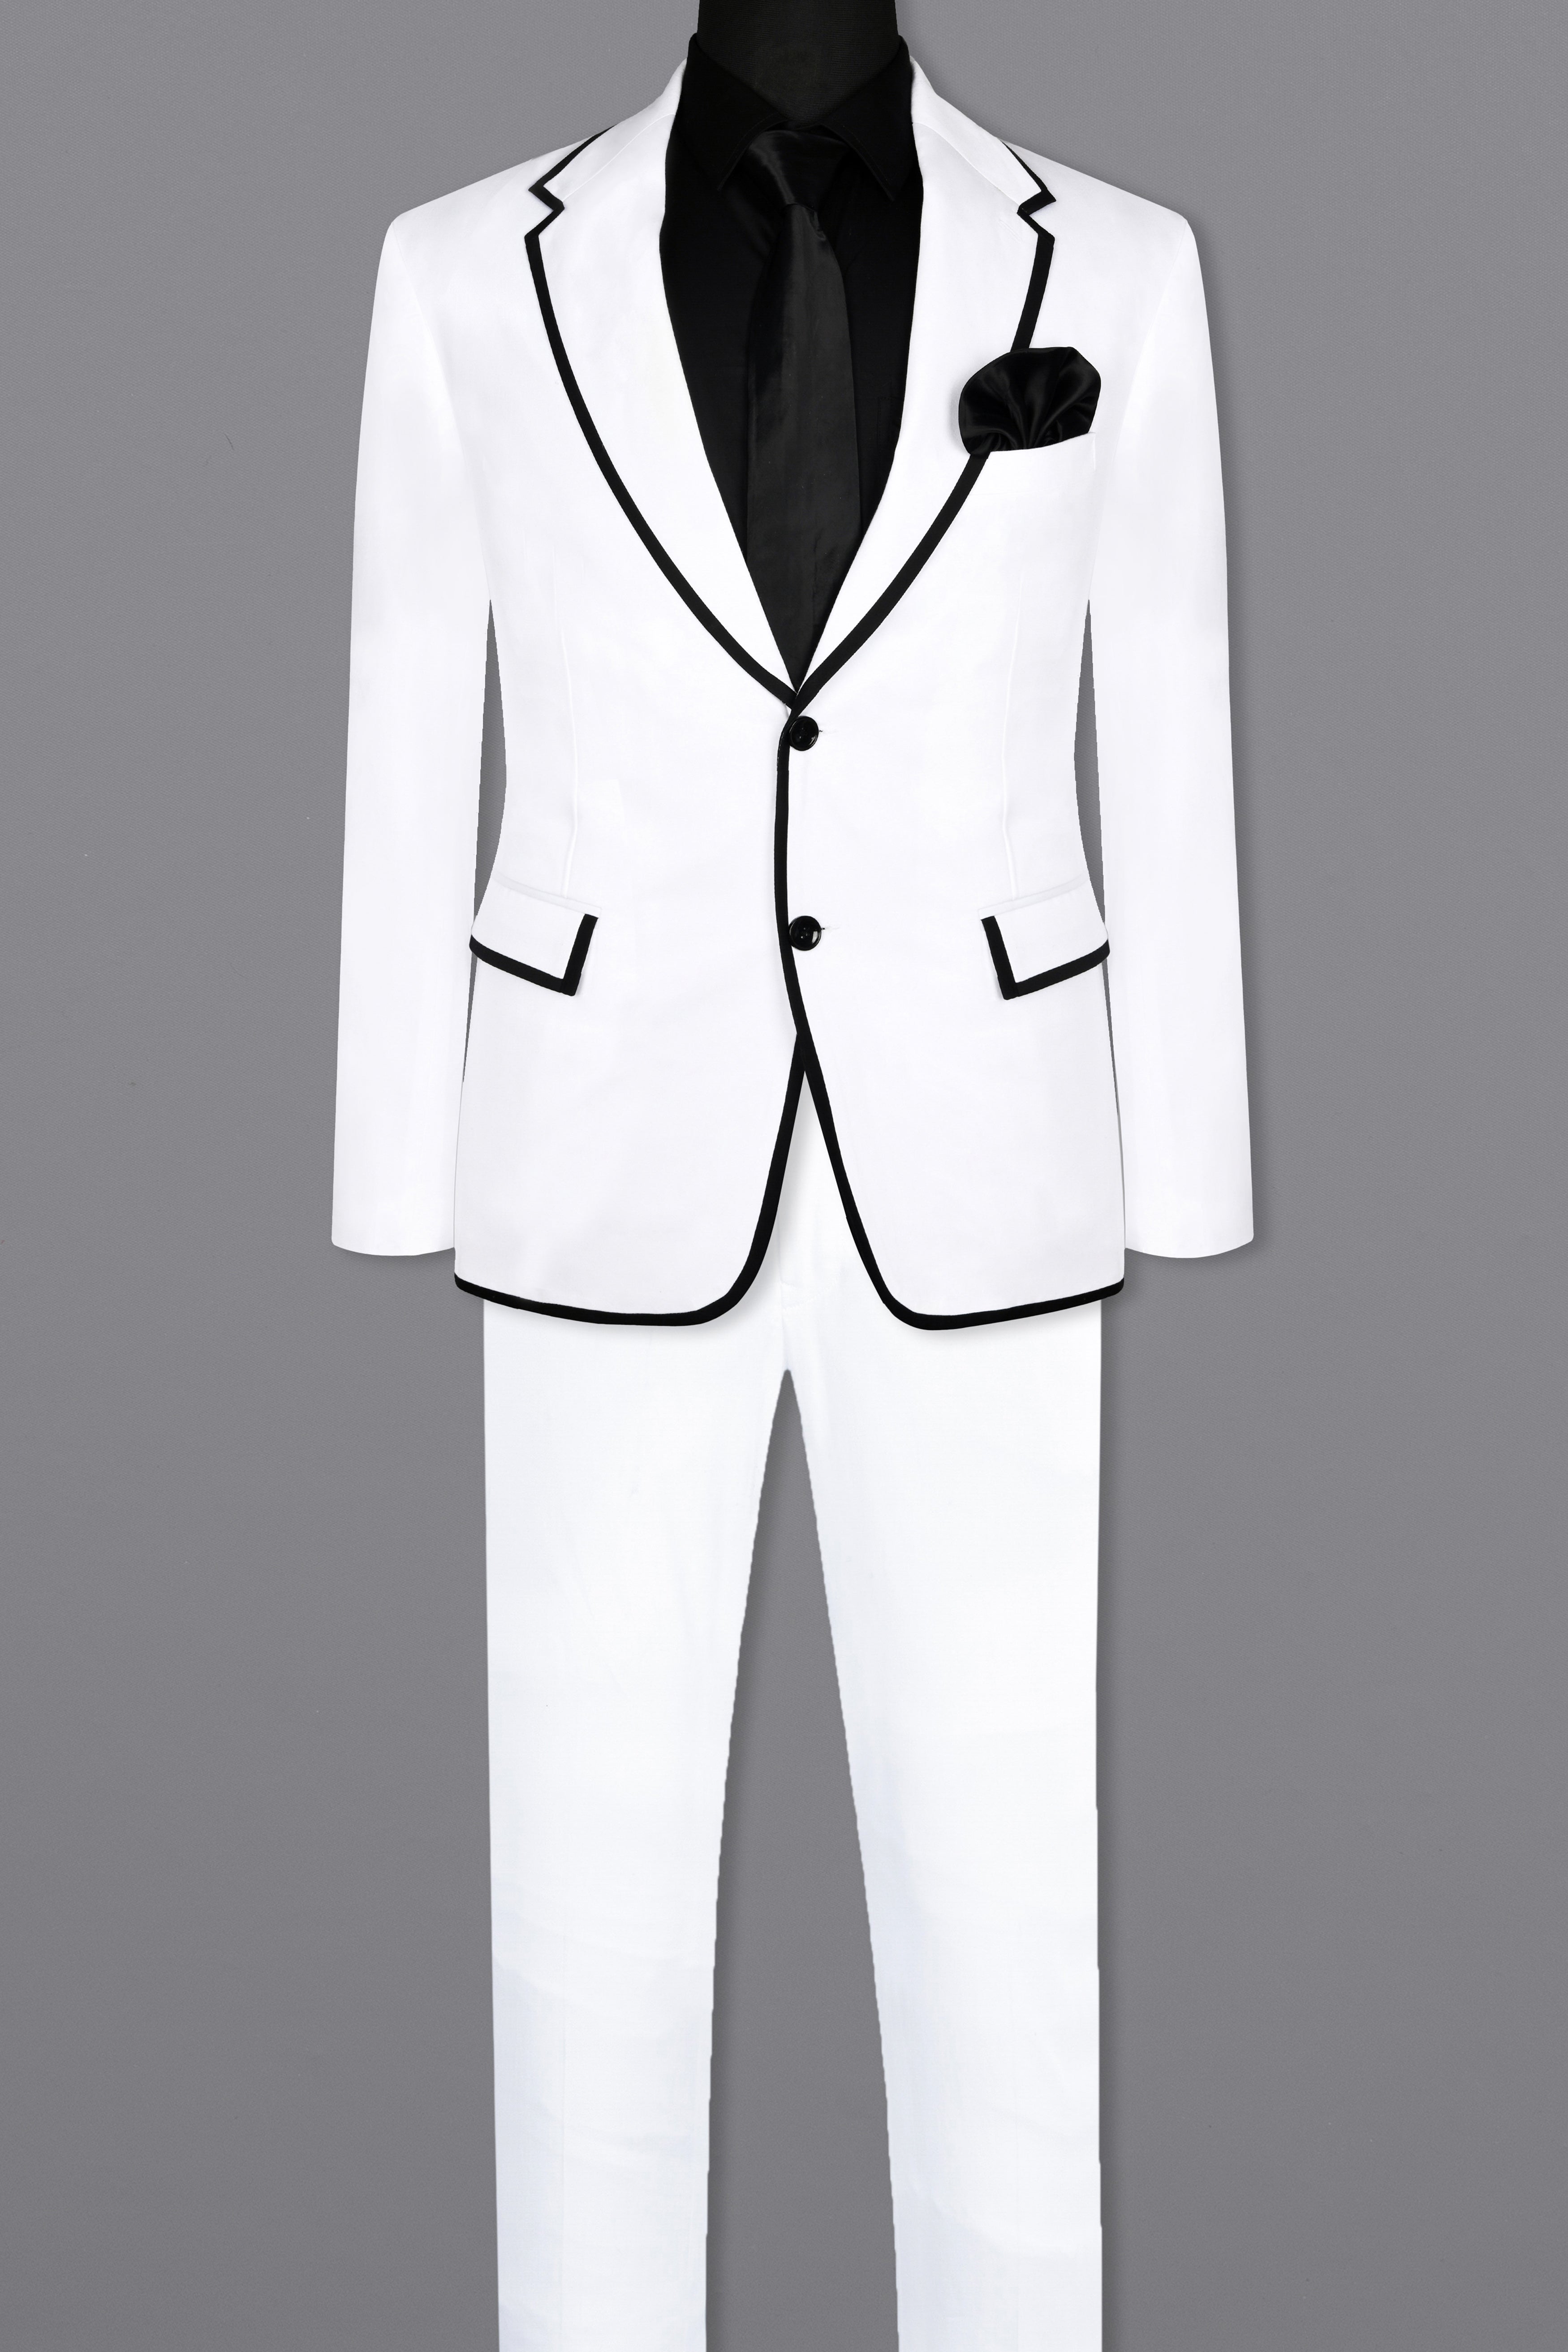 White with Black Border Patterned Premium Cotton suit